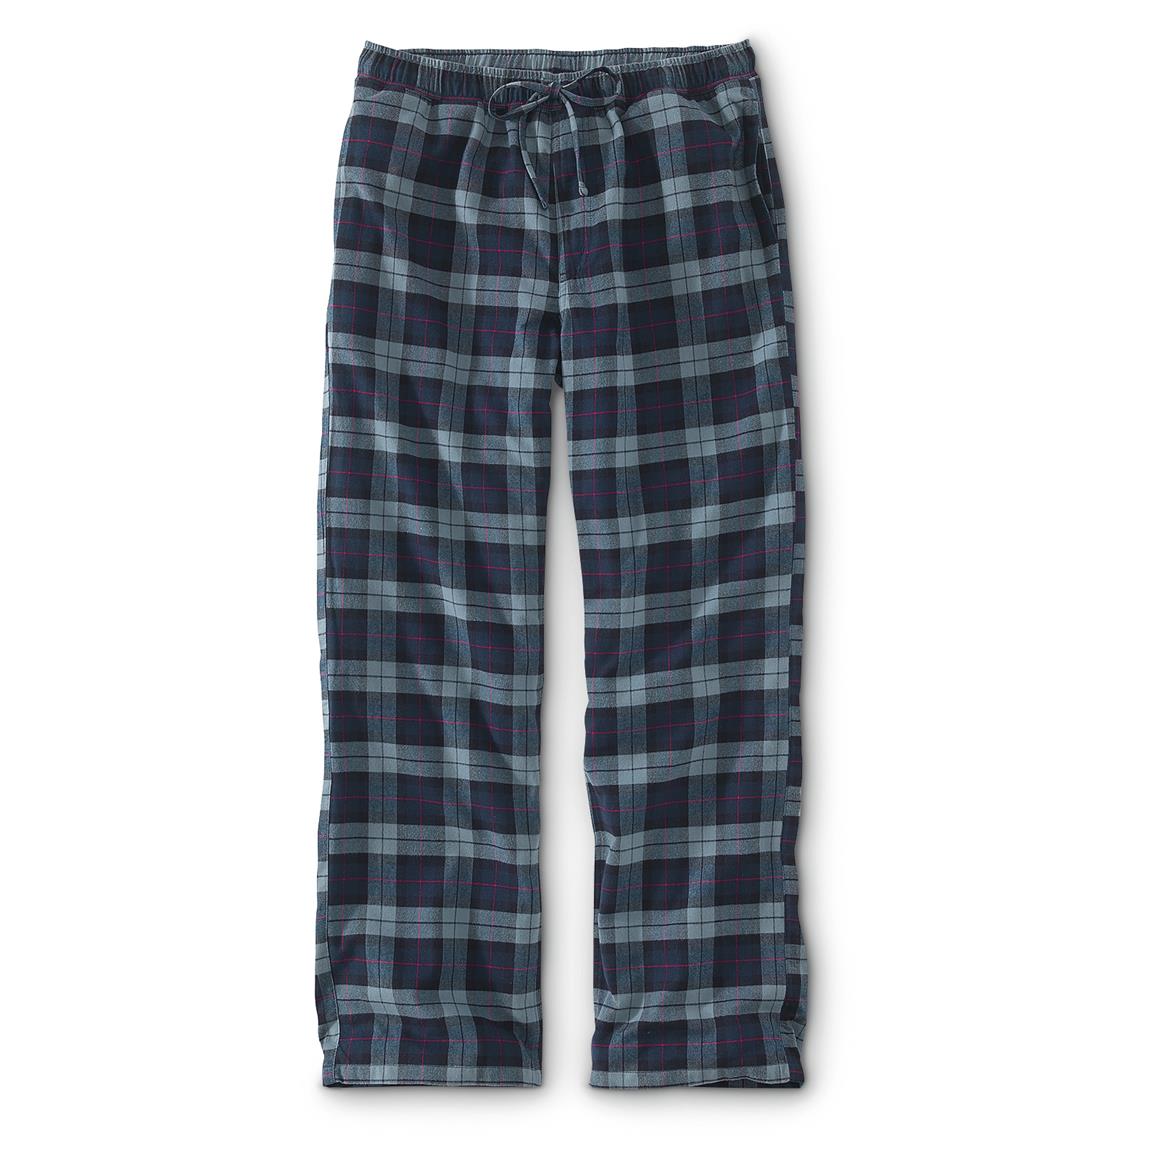 Carhartt Men's Flannel Pajama Pants - 666541, Sleepwear & Pajamas at ...